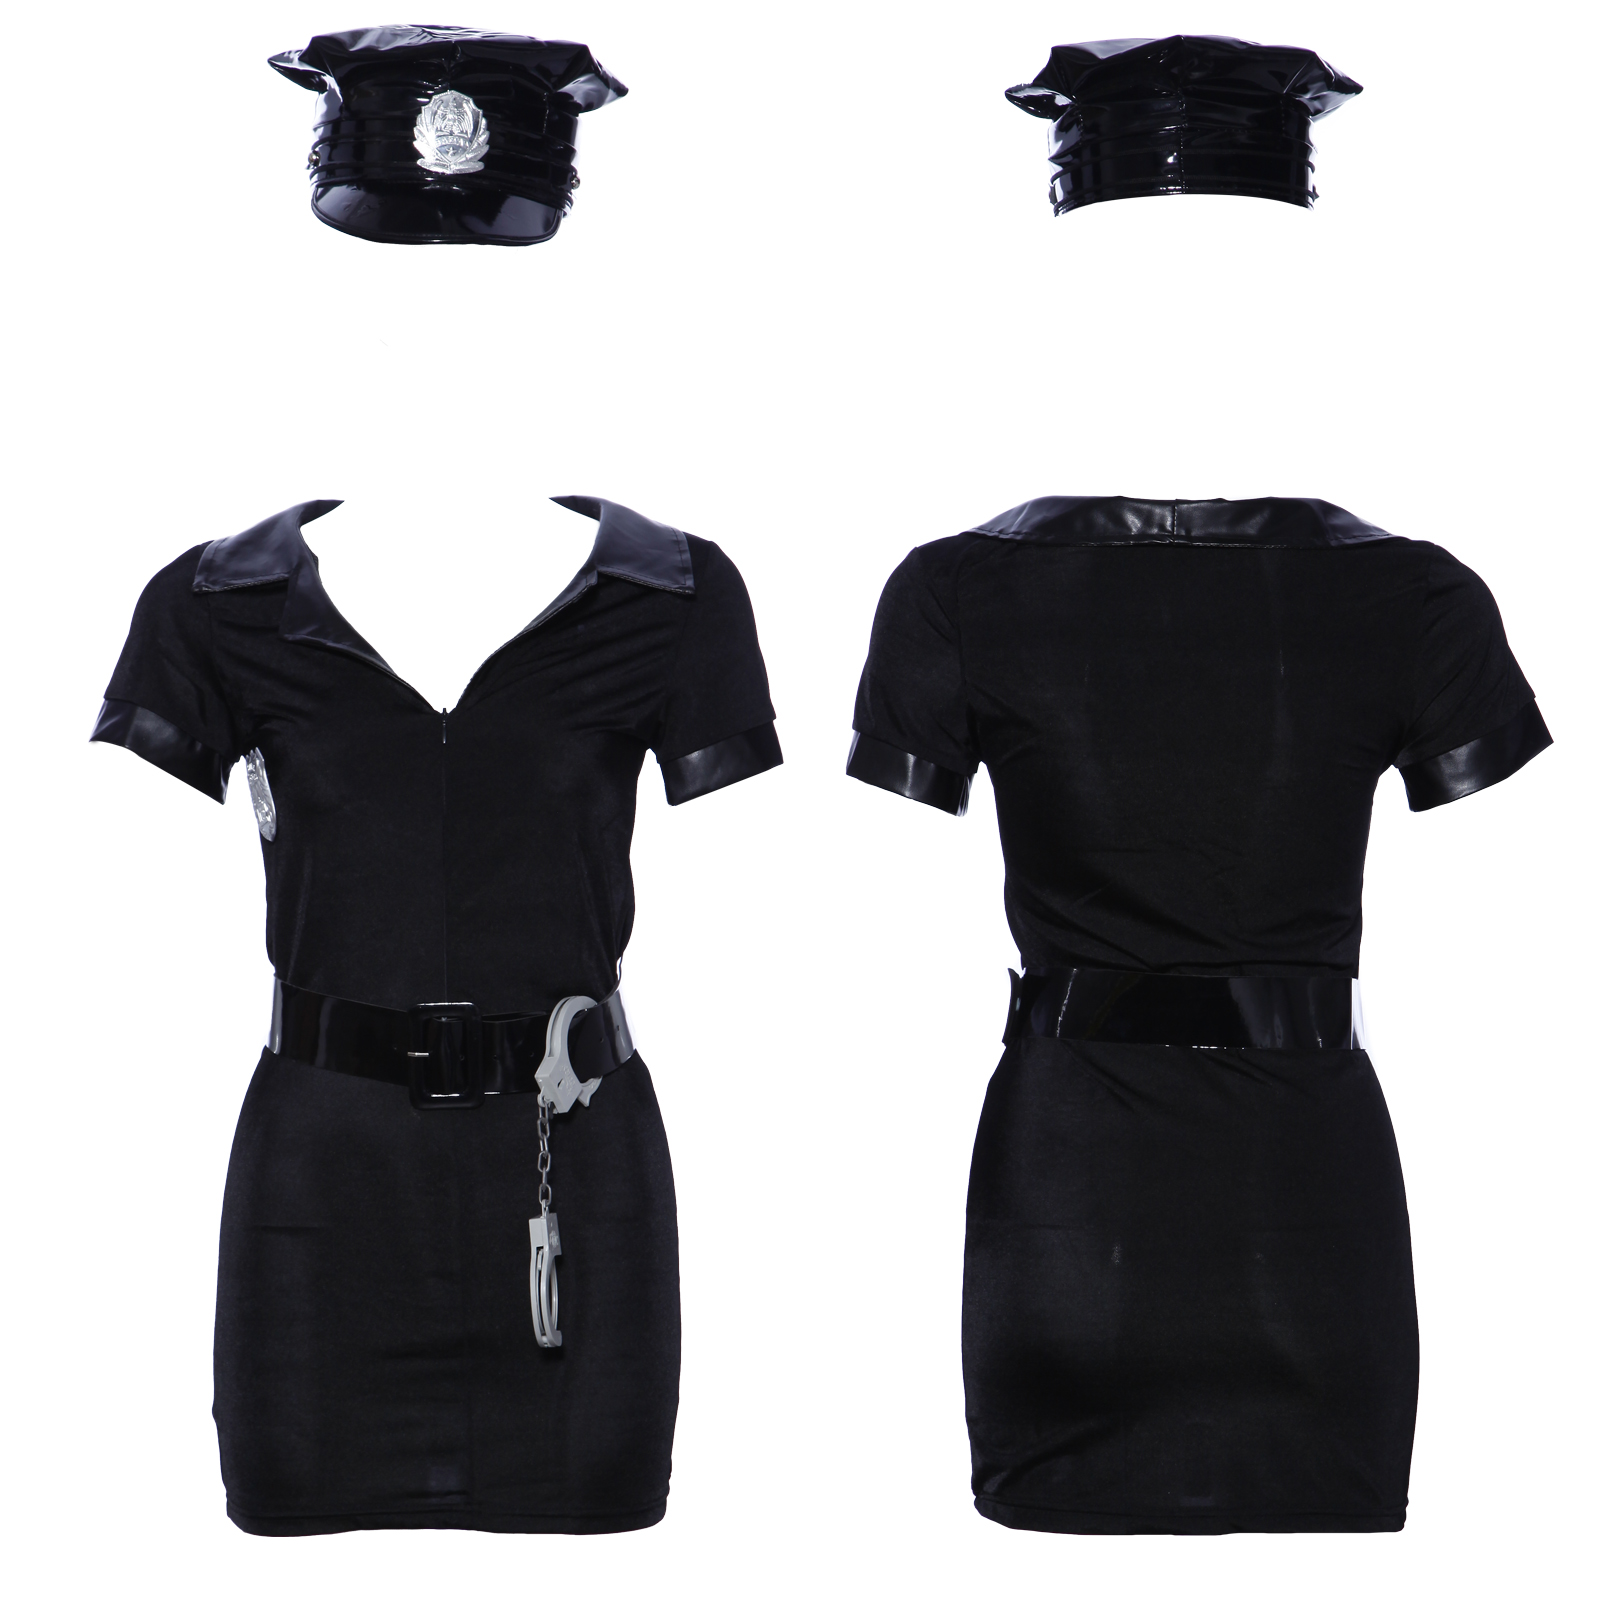 Sexy Ladies Police Woman Cop Uniform Costume Fancy Dress Hen Night